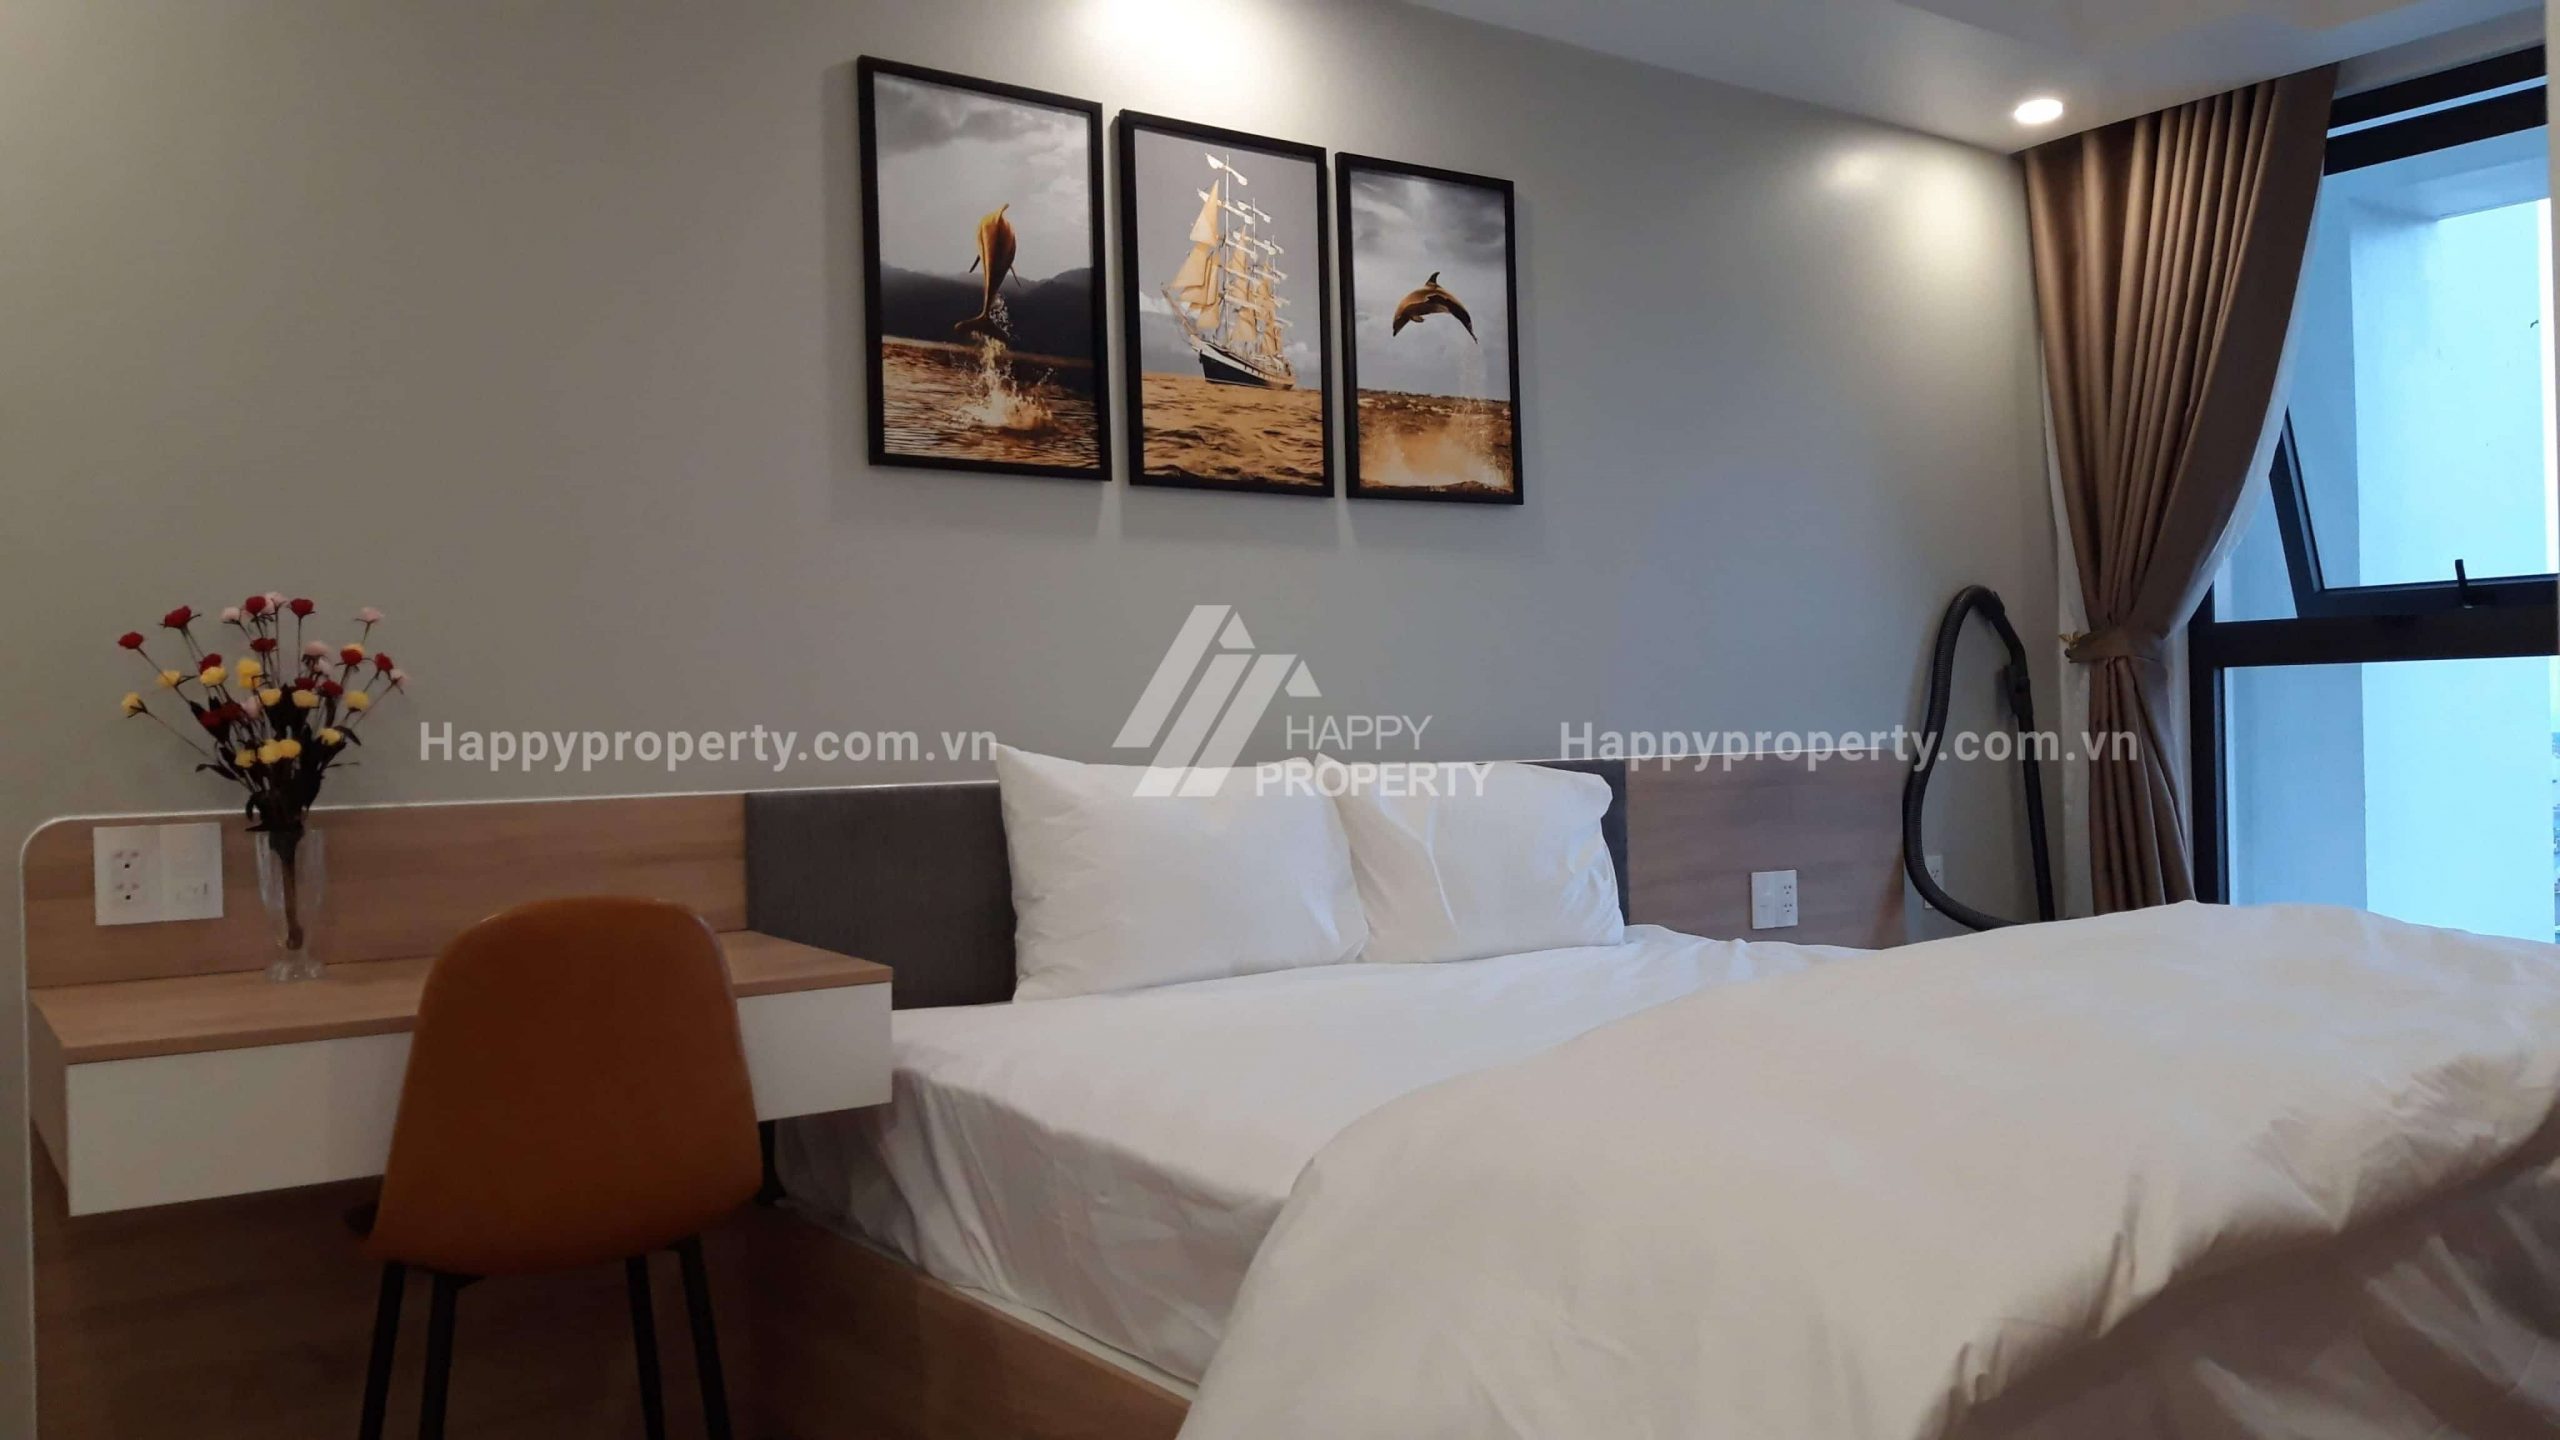 2 Bedrooms Gorgeous Hiyori Apartment For Rent – HRR16